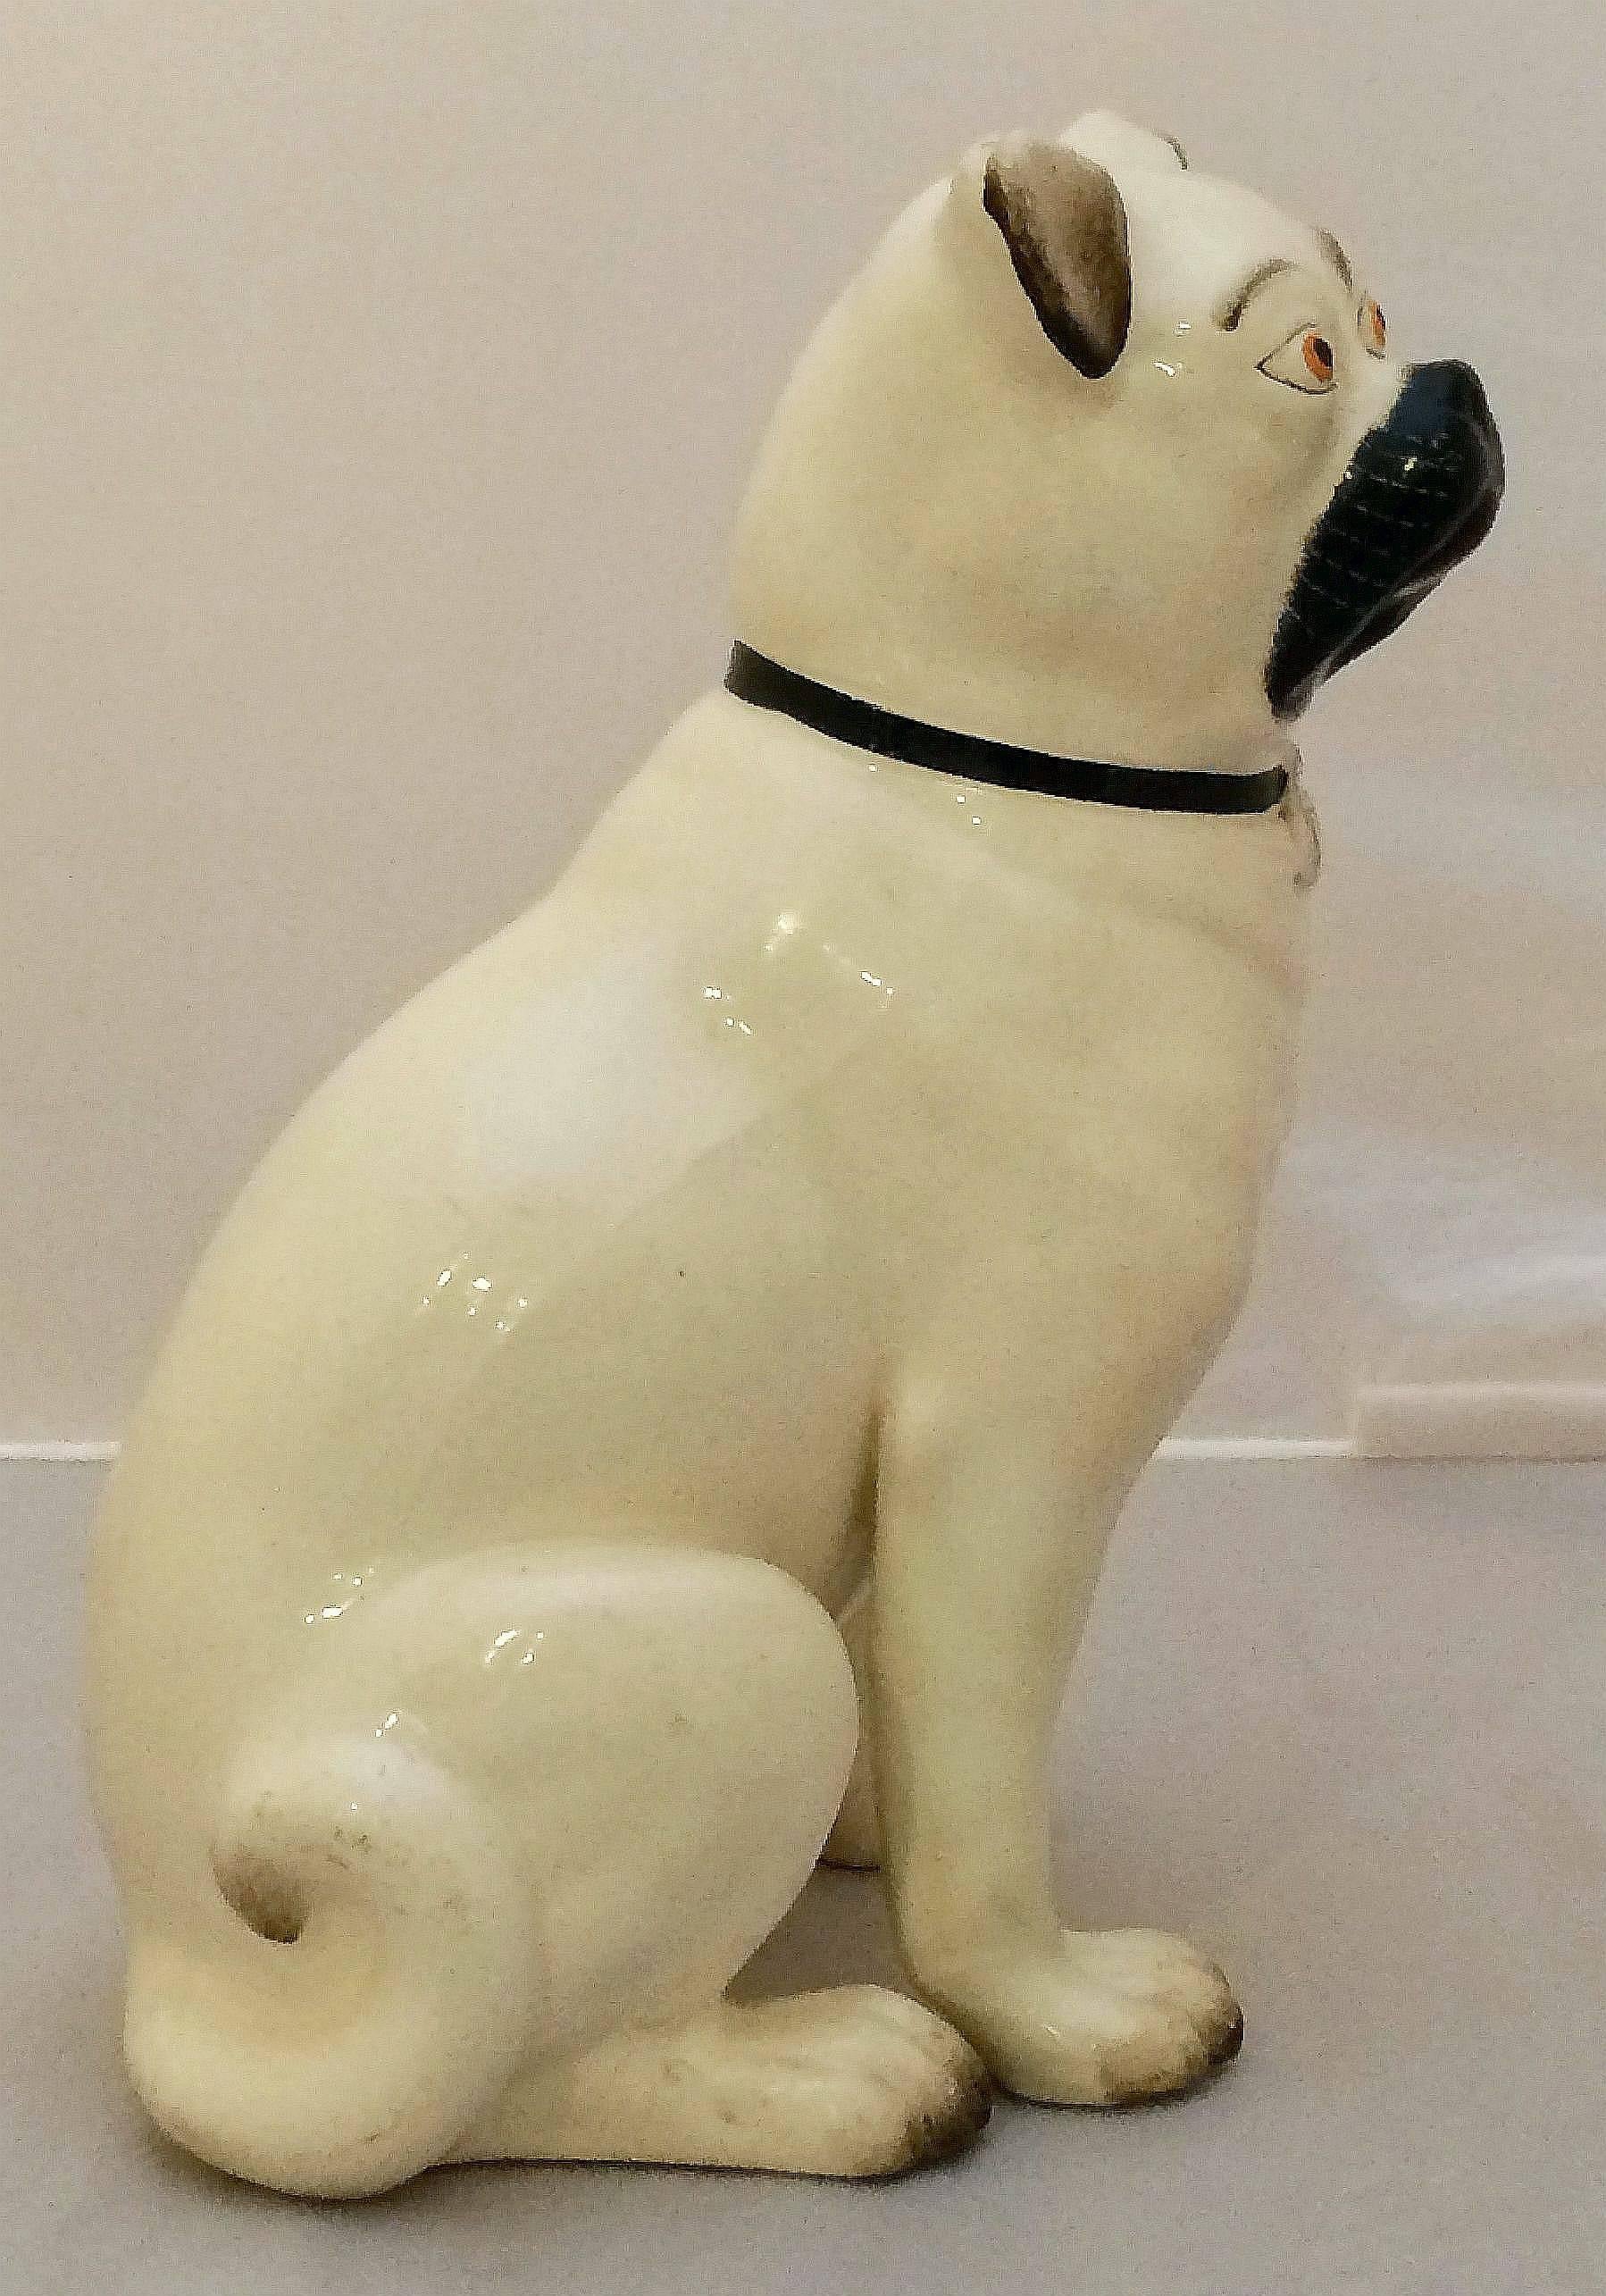 English Staffordshire Pug from 19th Century, England